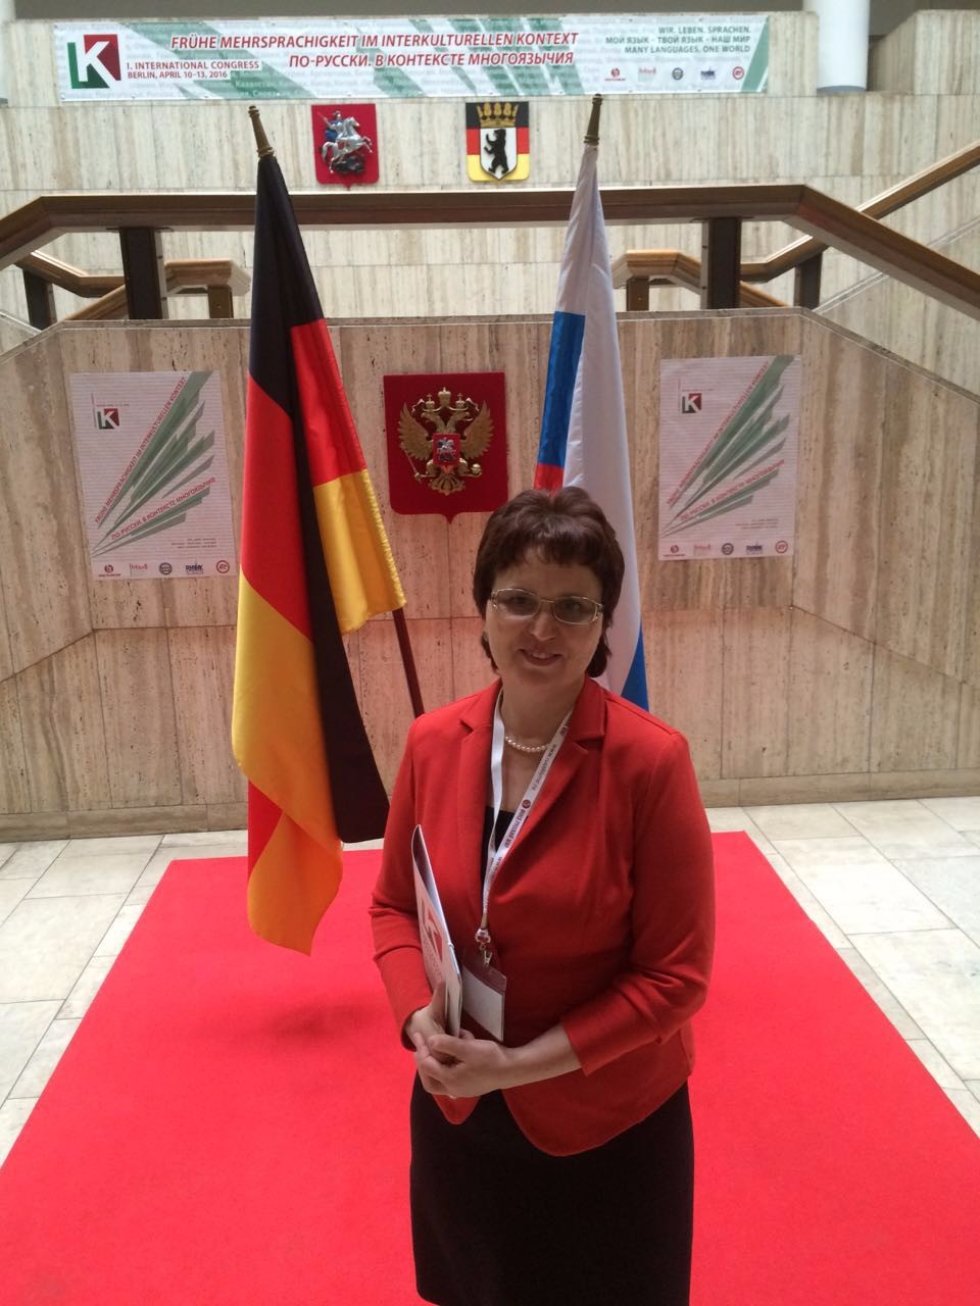 International congress on multilingualism held in Berlin